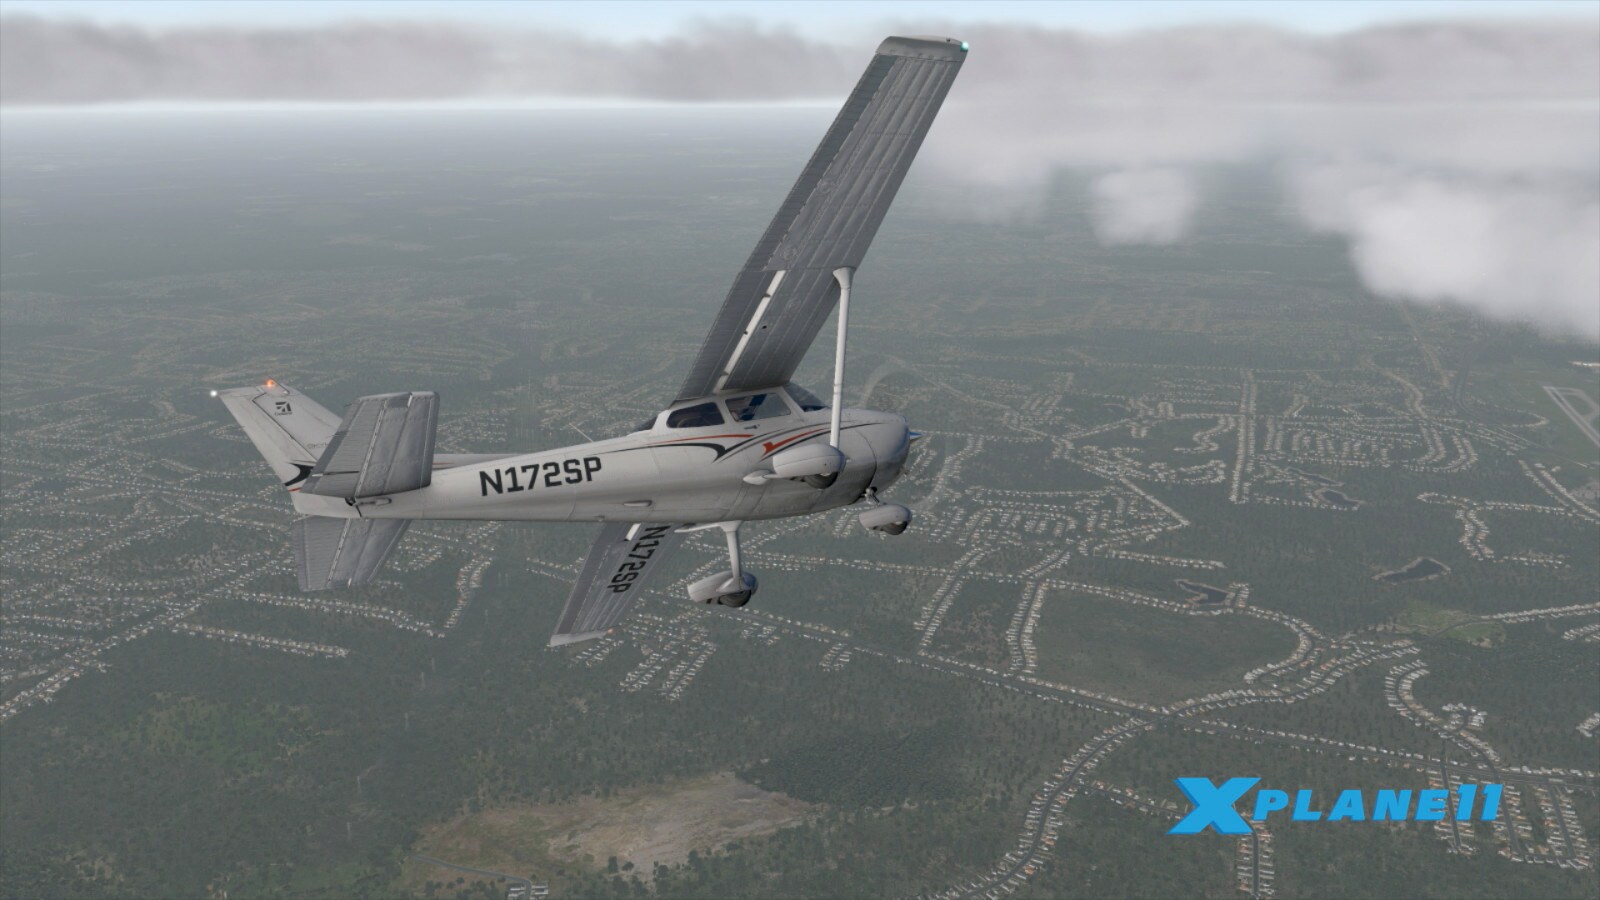 Buy X-Plane 11 Key GLOBAL - Cheap - G2A.COM!